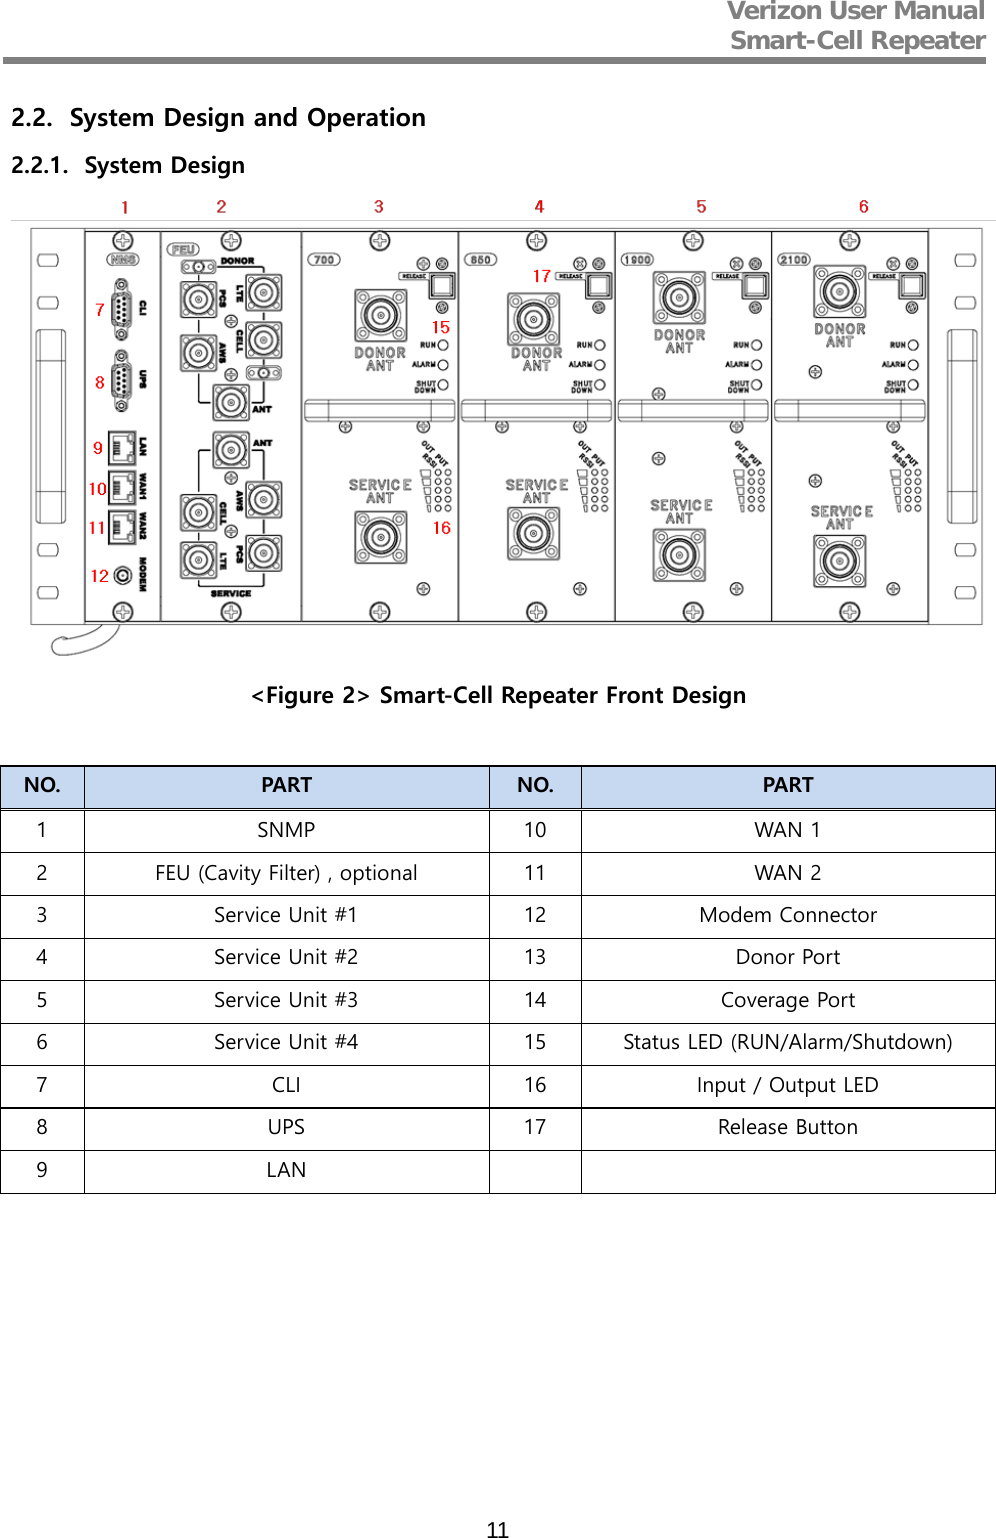 Verizon User Manual  Smart-Cell Repeater   11 2.2. System Design and Operation 2.2.1. System Design  &lt;Figure 2&gt; Smart-Cell Repeater Front Design  NO. PART NO. PART 1  SNMP 10 WAN 1 2  FEU (Cavity Filter) , optional 11 WAN 2 3  Service Unit #1 12 Modem Connector 4  Service Unit #2 13 Donor Port 5  Service Unit #3 14 Coverage Port 6  Service Unit #4 15 Status LED (RUN/Alarm/Shutdown) 7  CLI 16 Input / Output LED 8  UPS 17 Release Button 9  LAN       